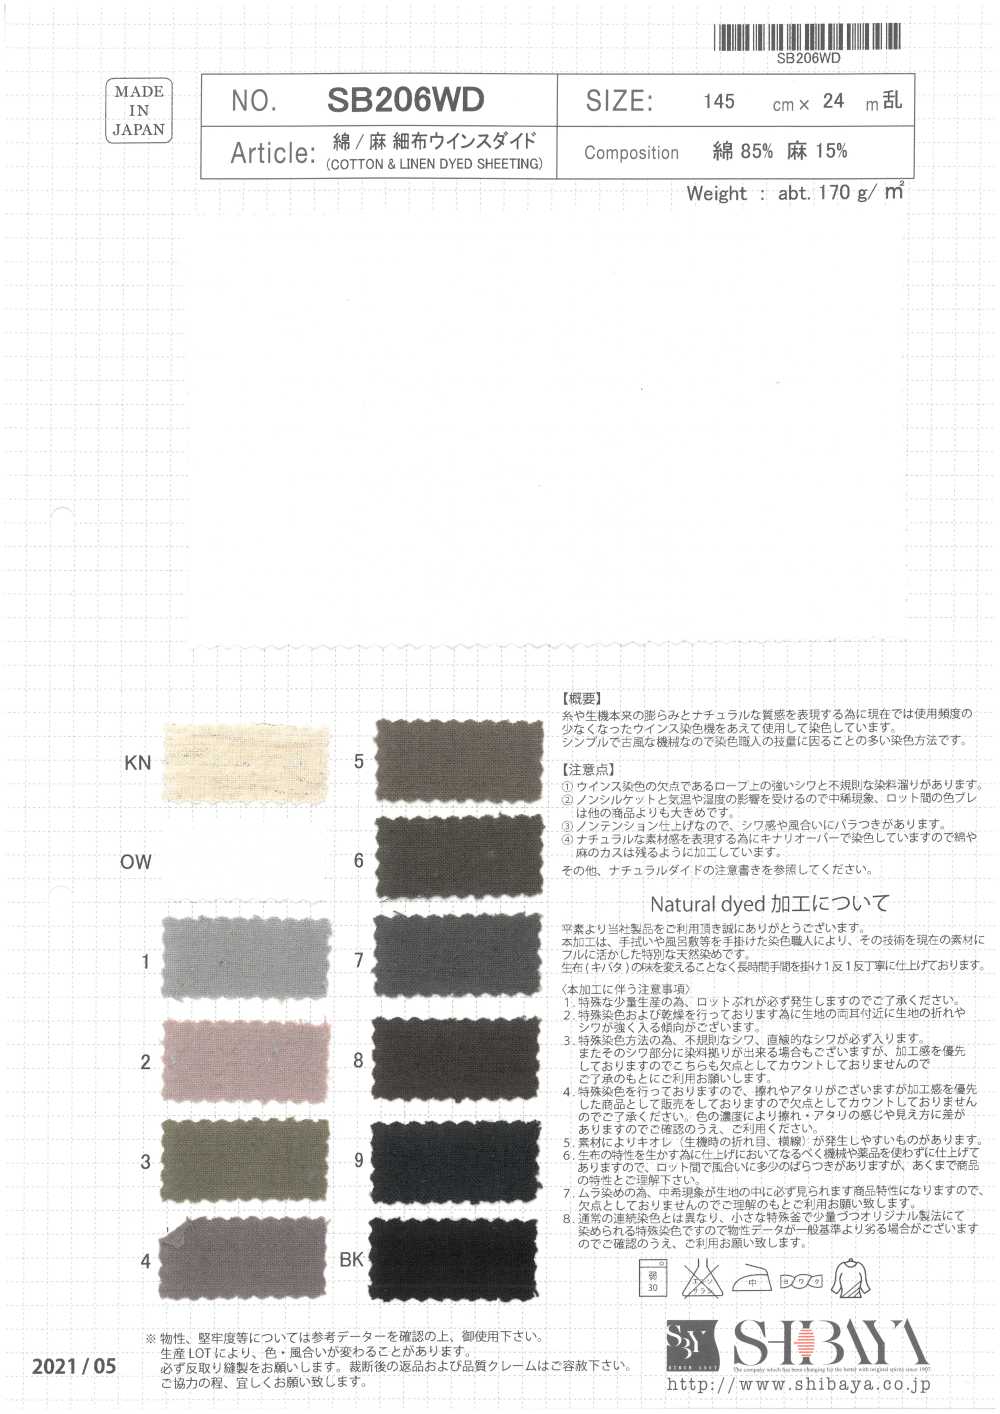 SB206WD Teinture De Linge En Coton/lin[Fabrication De Textile] SHIBAYA